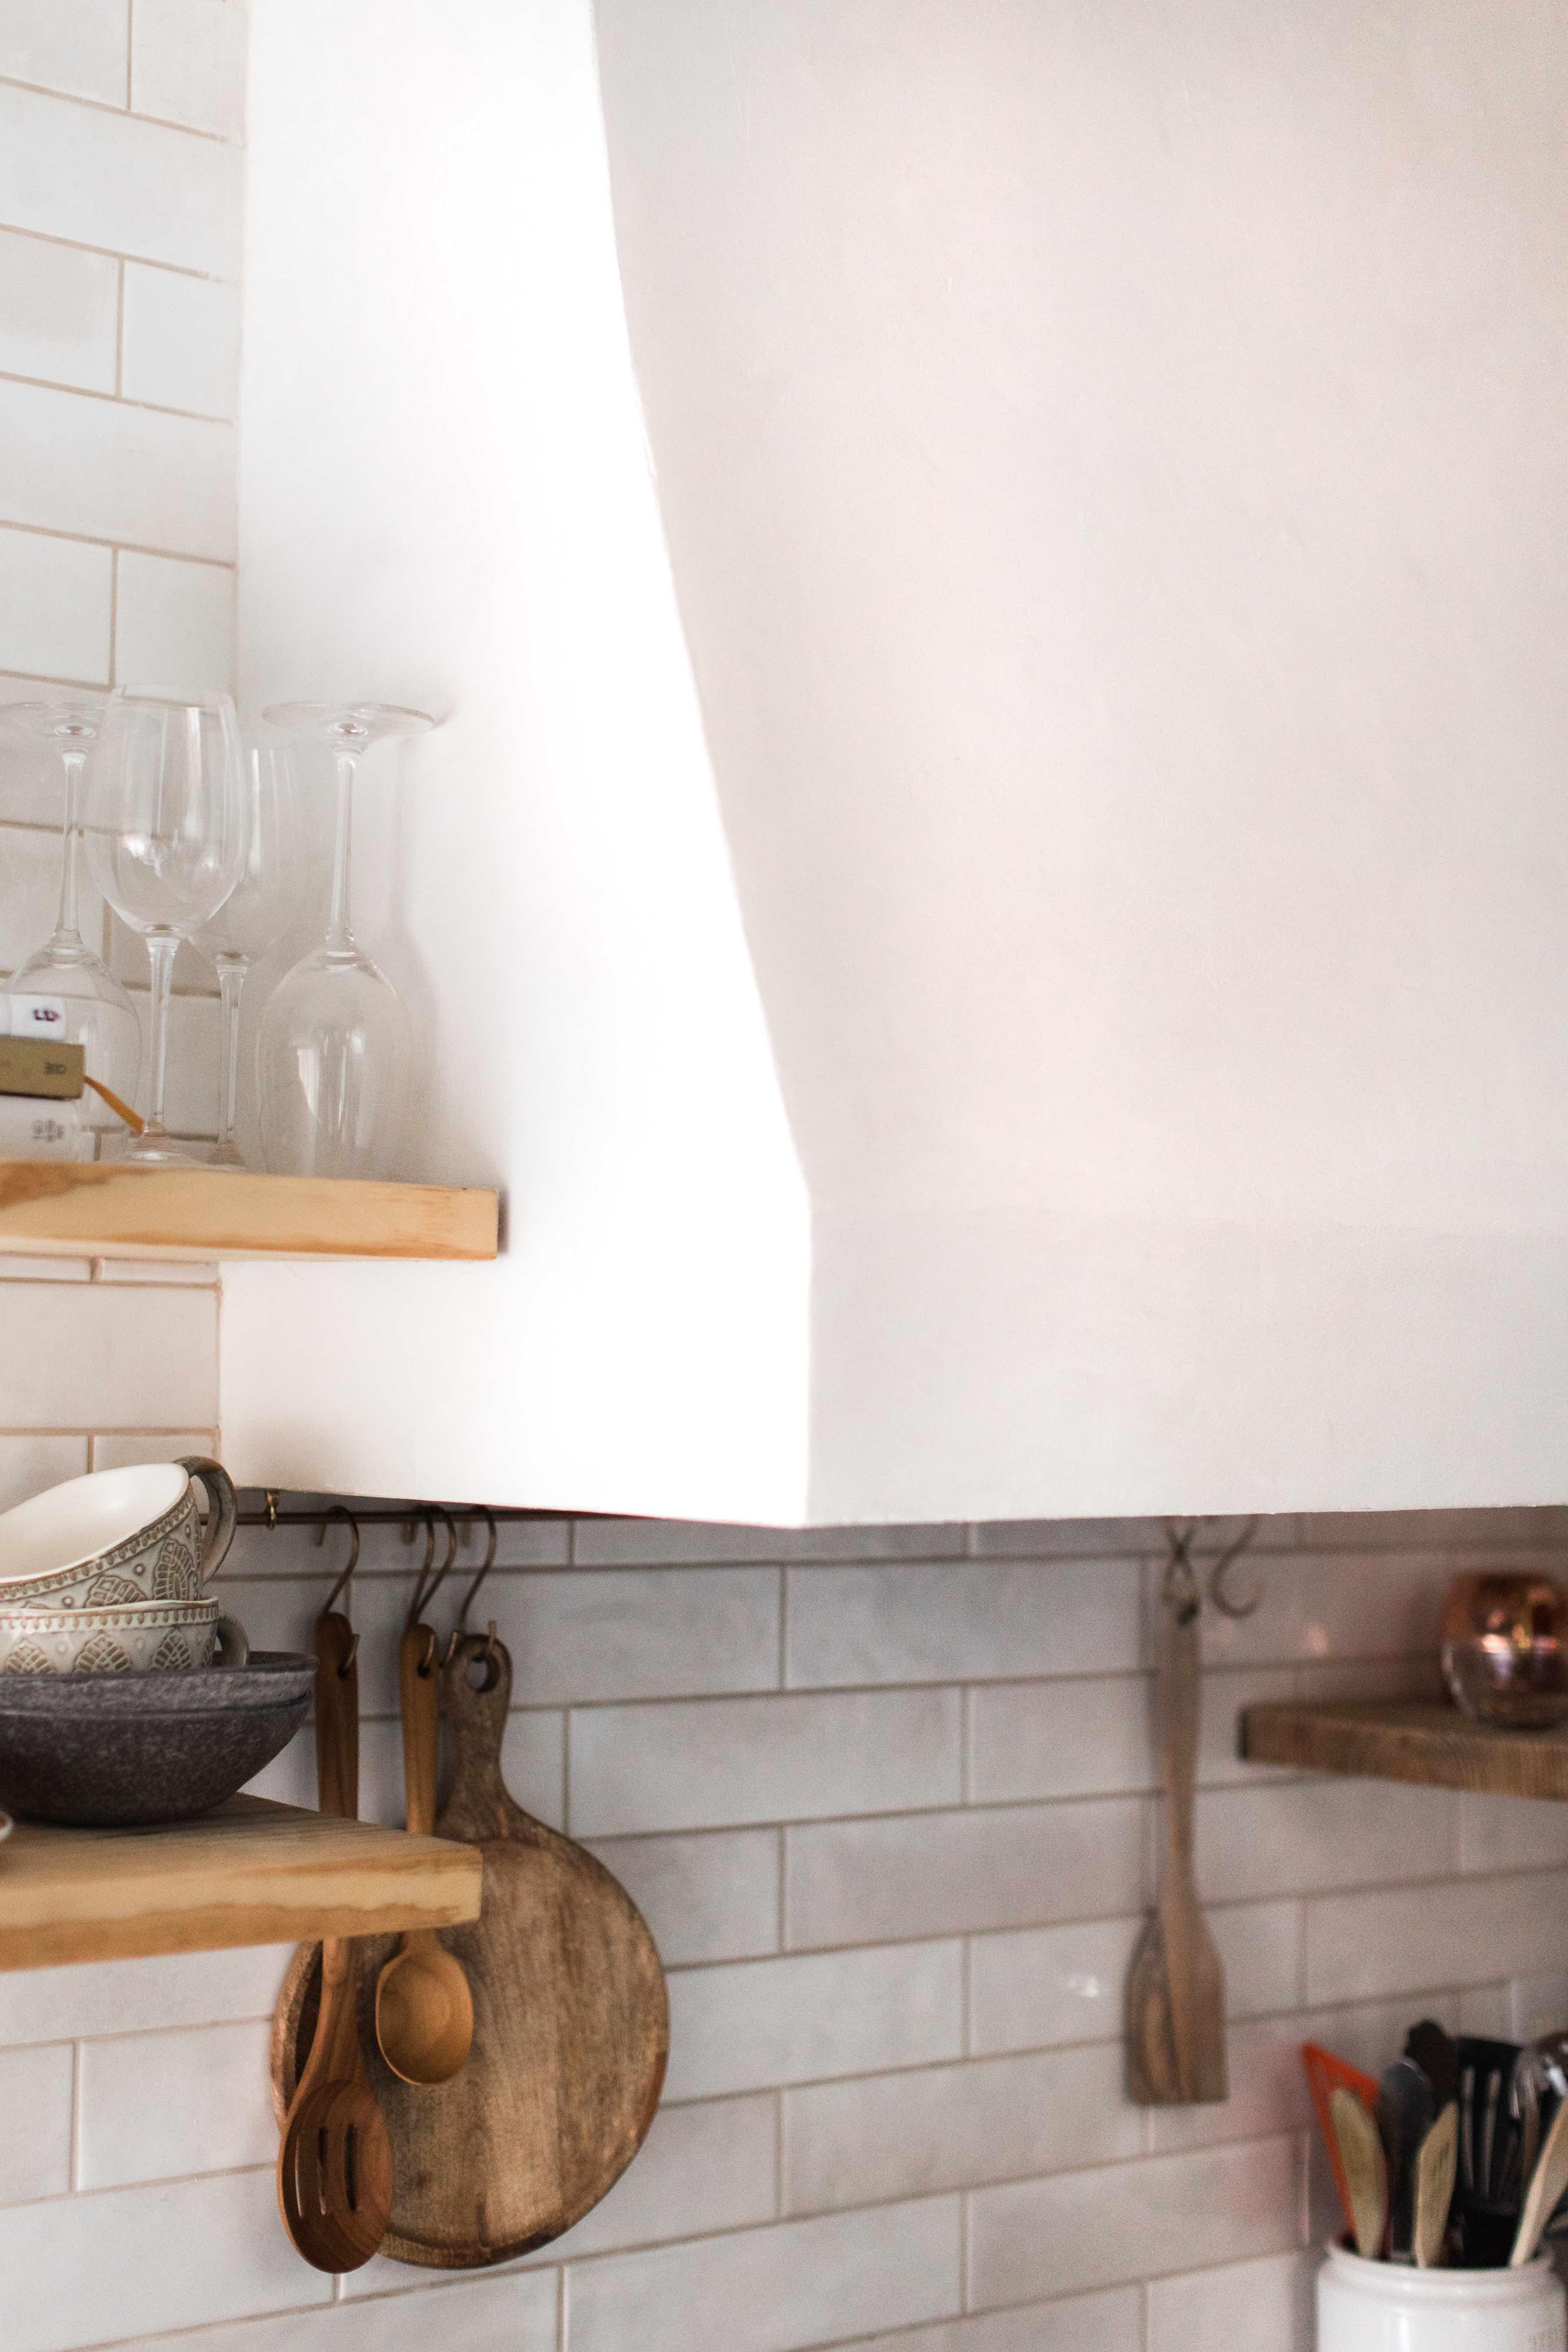 White venetian plaster range hood next to floating light wood shelves with kitchenware